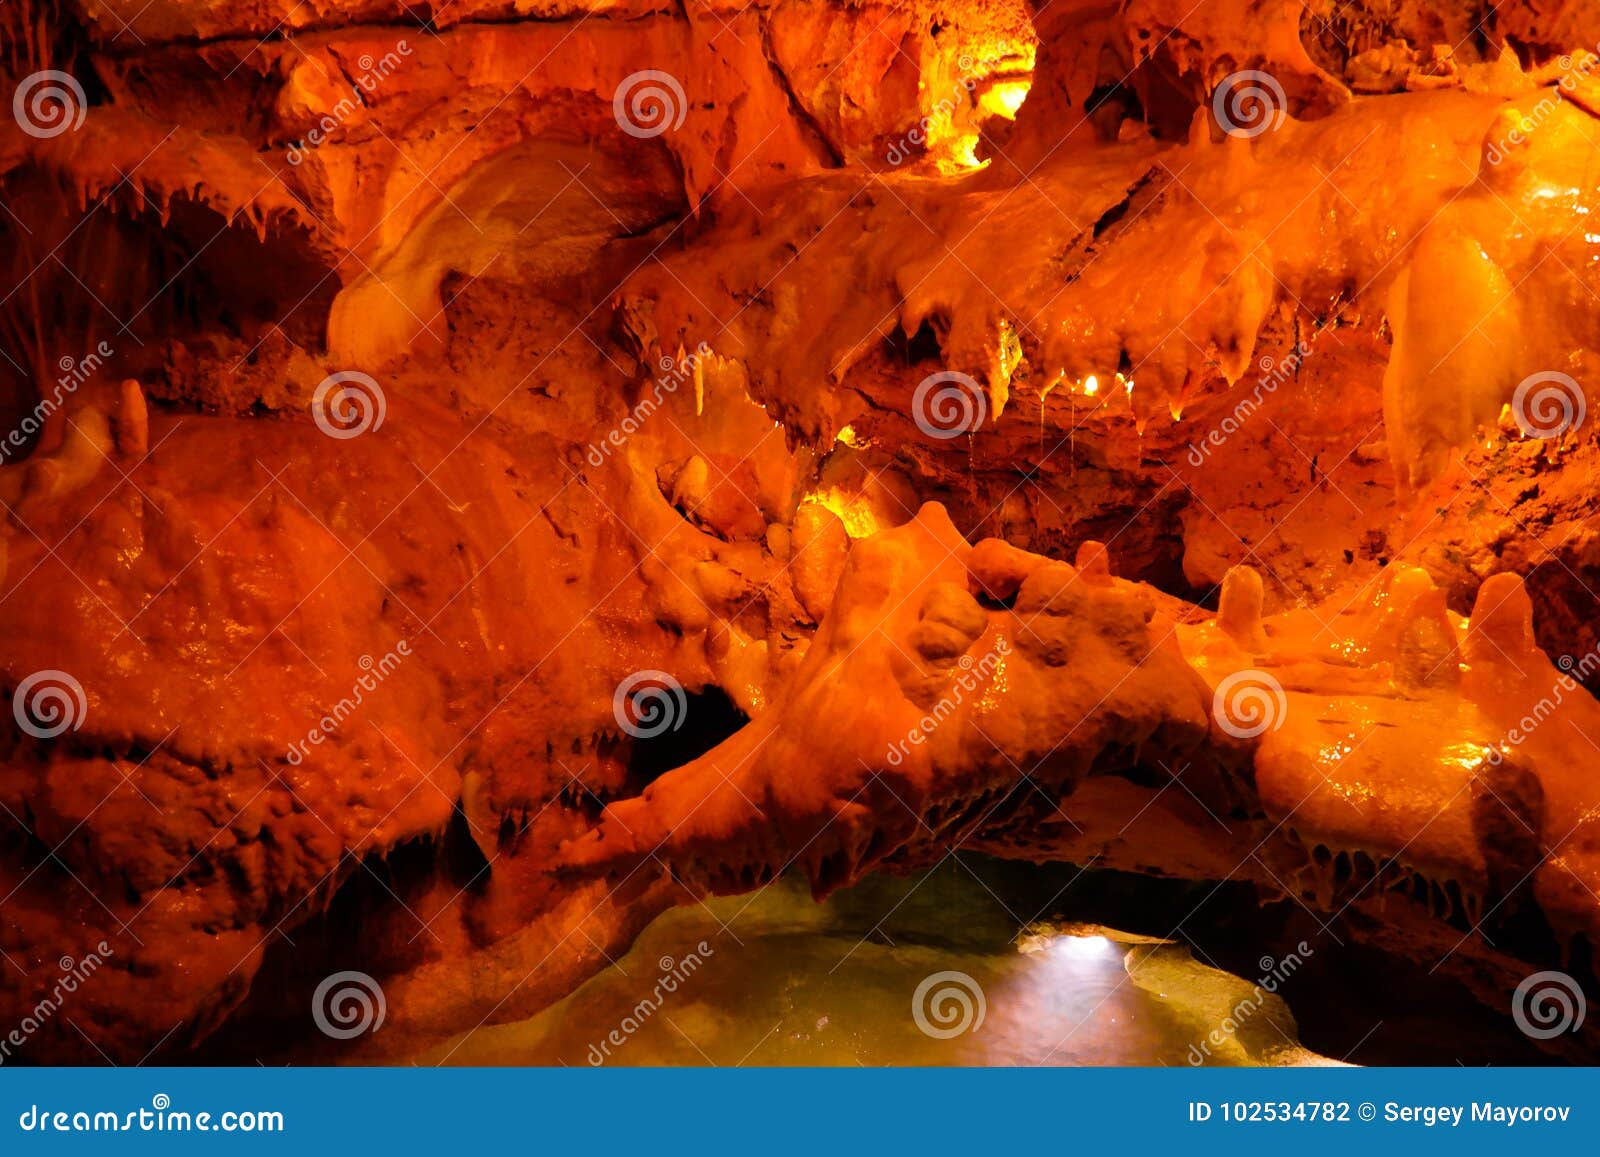 interior view to grutas mira de aire cave, portugal